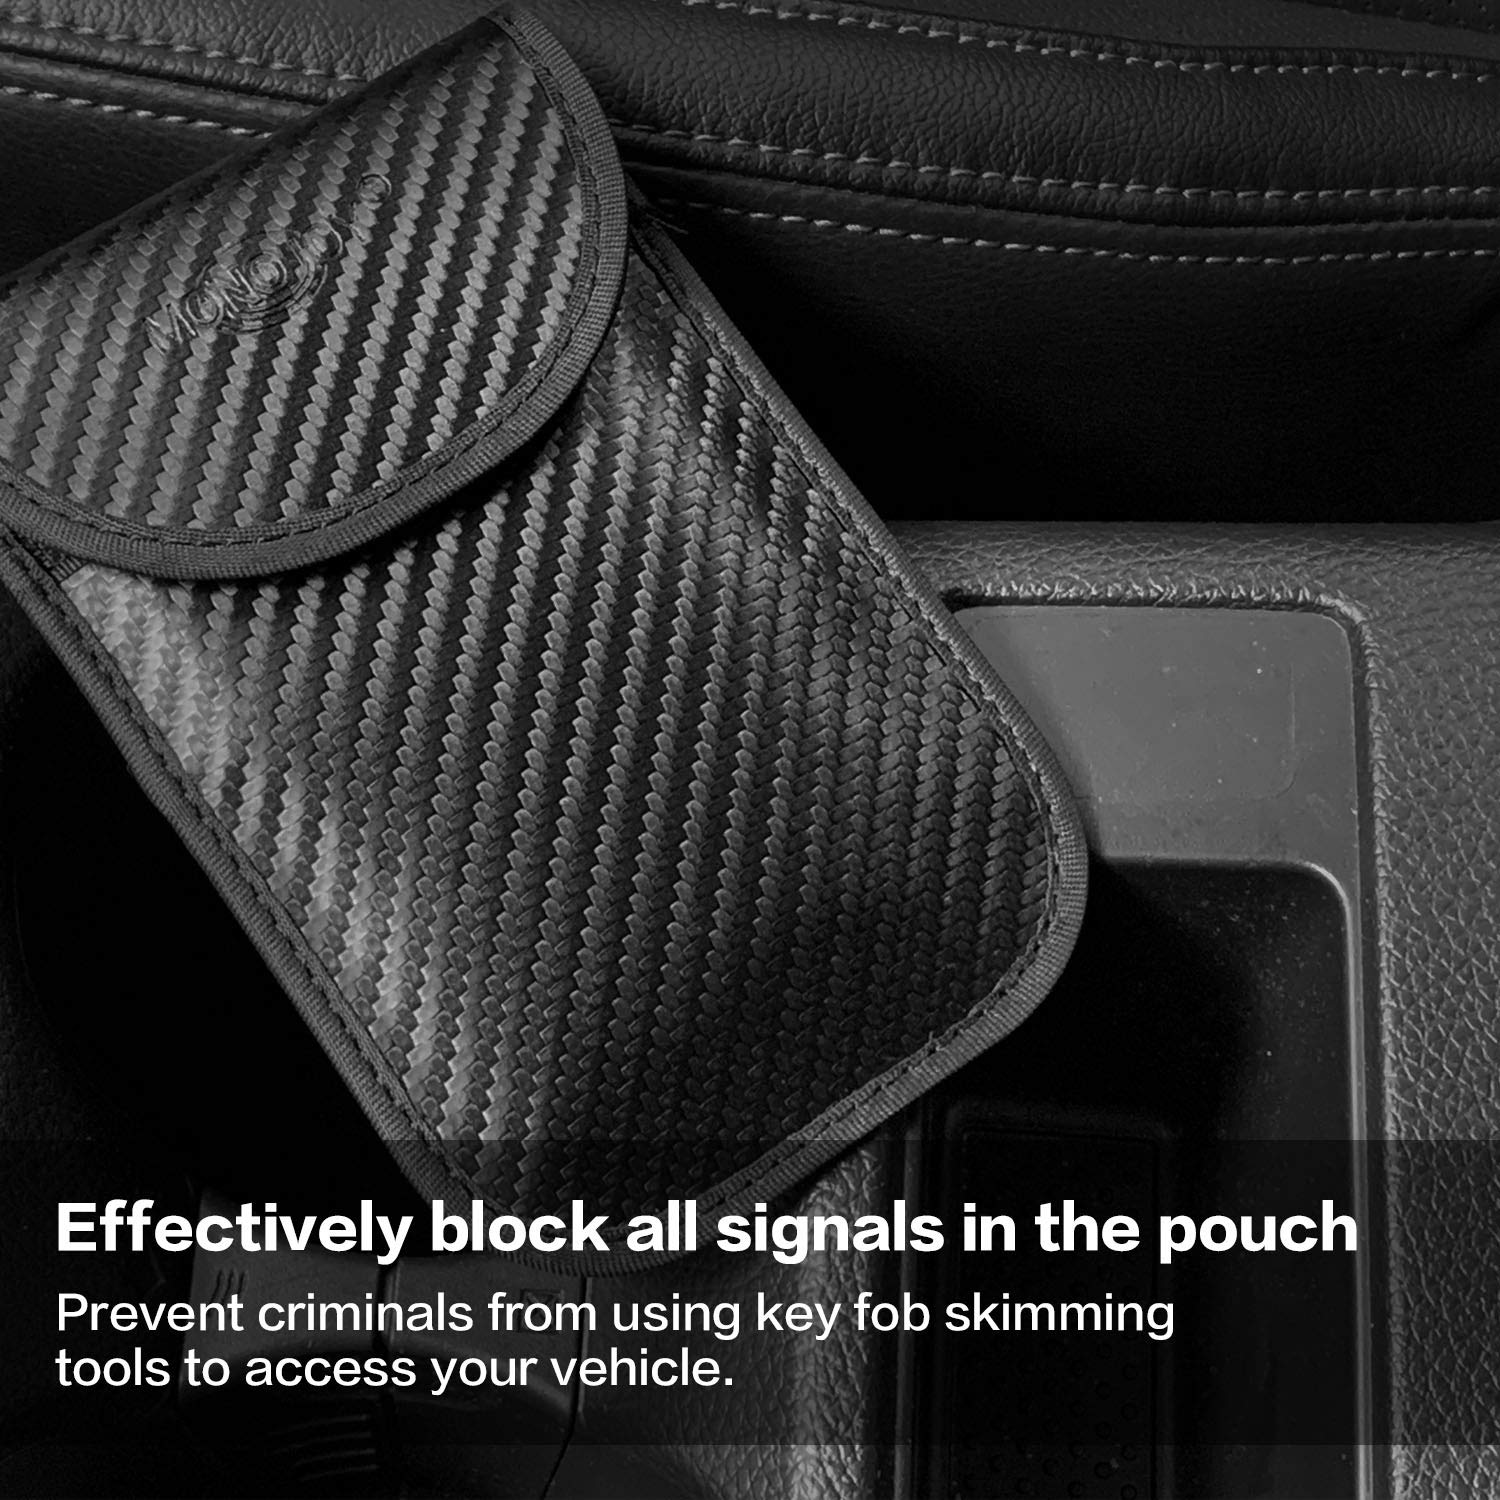 MONOJOY Faraday Pouch for Car Keys, Car Key Signal Blocker, 2 Pack Faraday Bag, RFID Key Pouch, Keyless Signal Blocking Key Case, Anti-theft Remote Entry Smart Fobs Protection (Black, Carbon fiber)